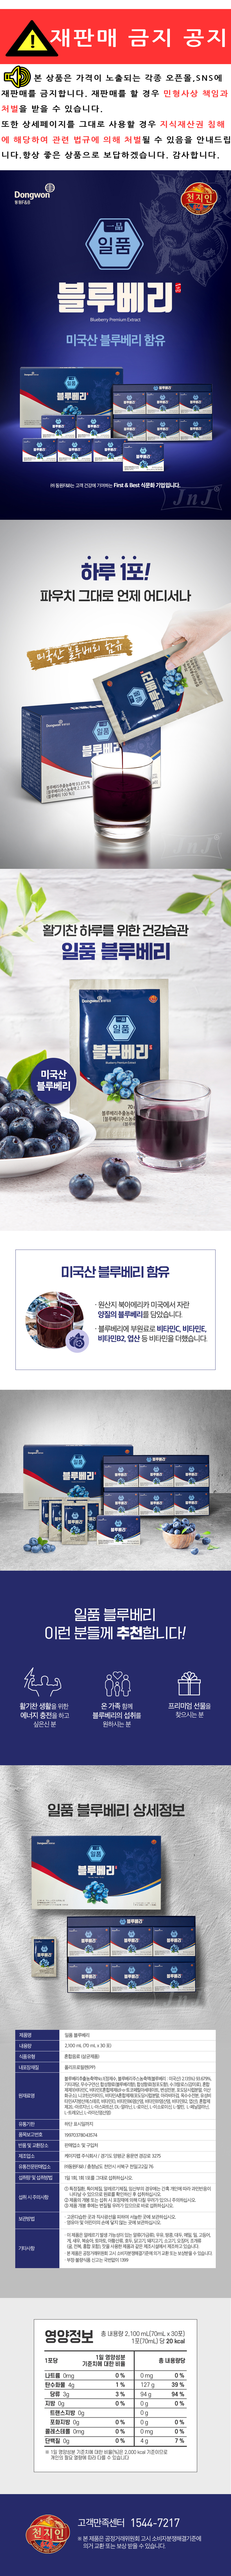 blueberry_info.jpg